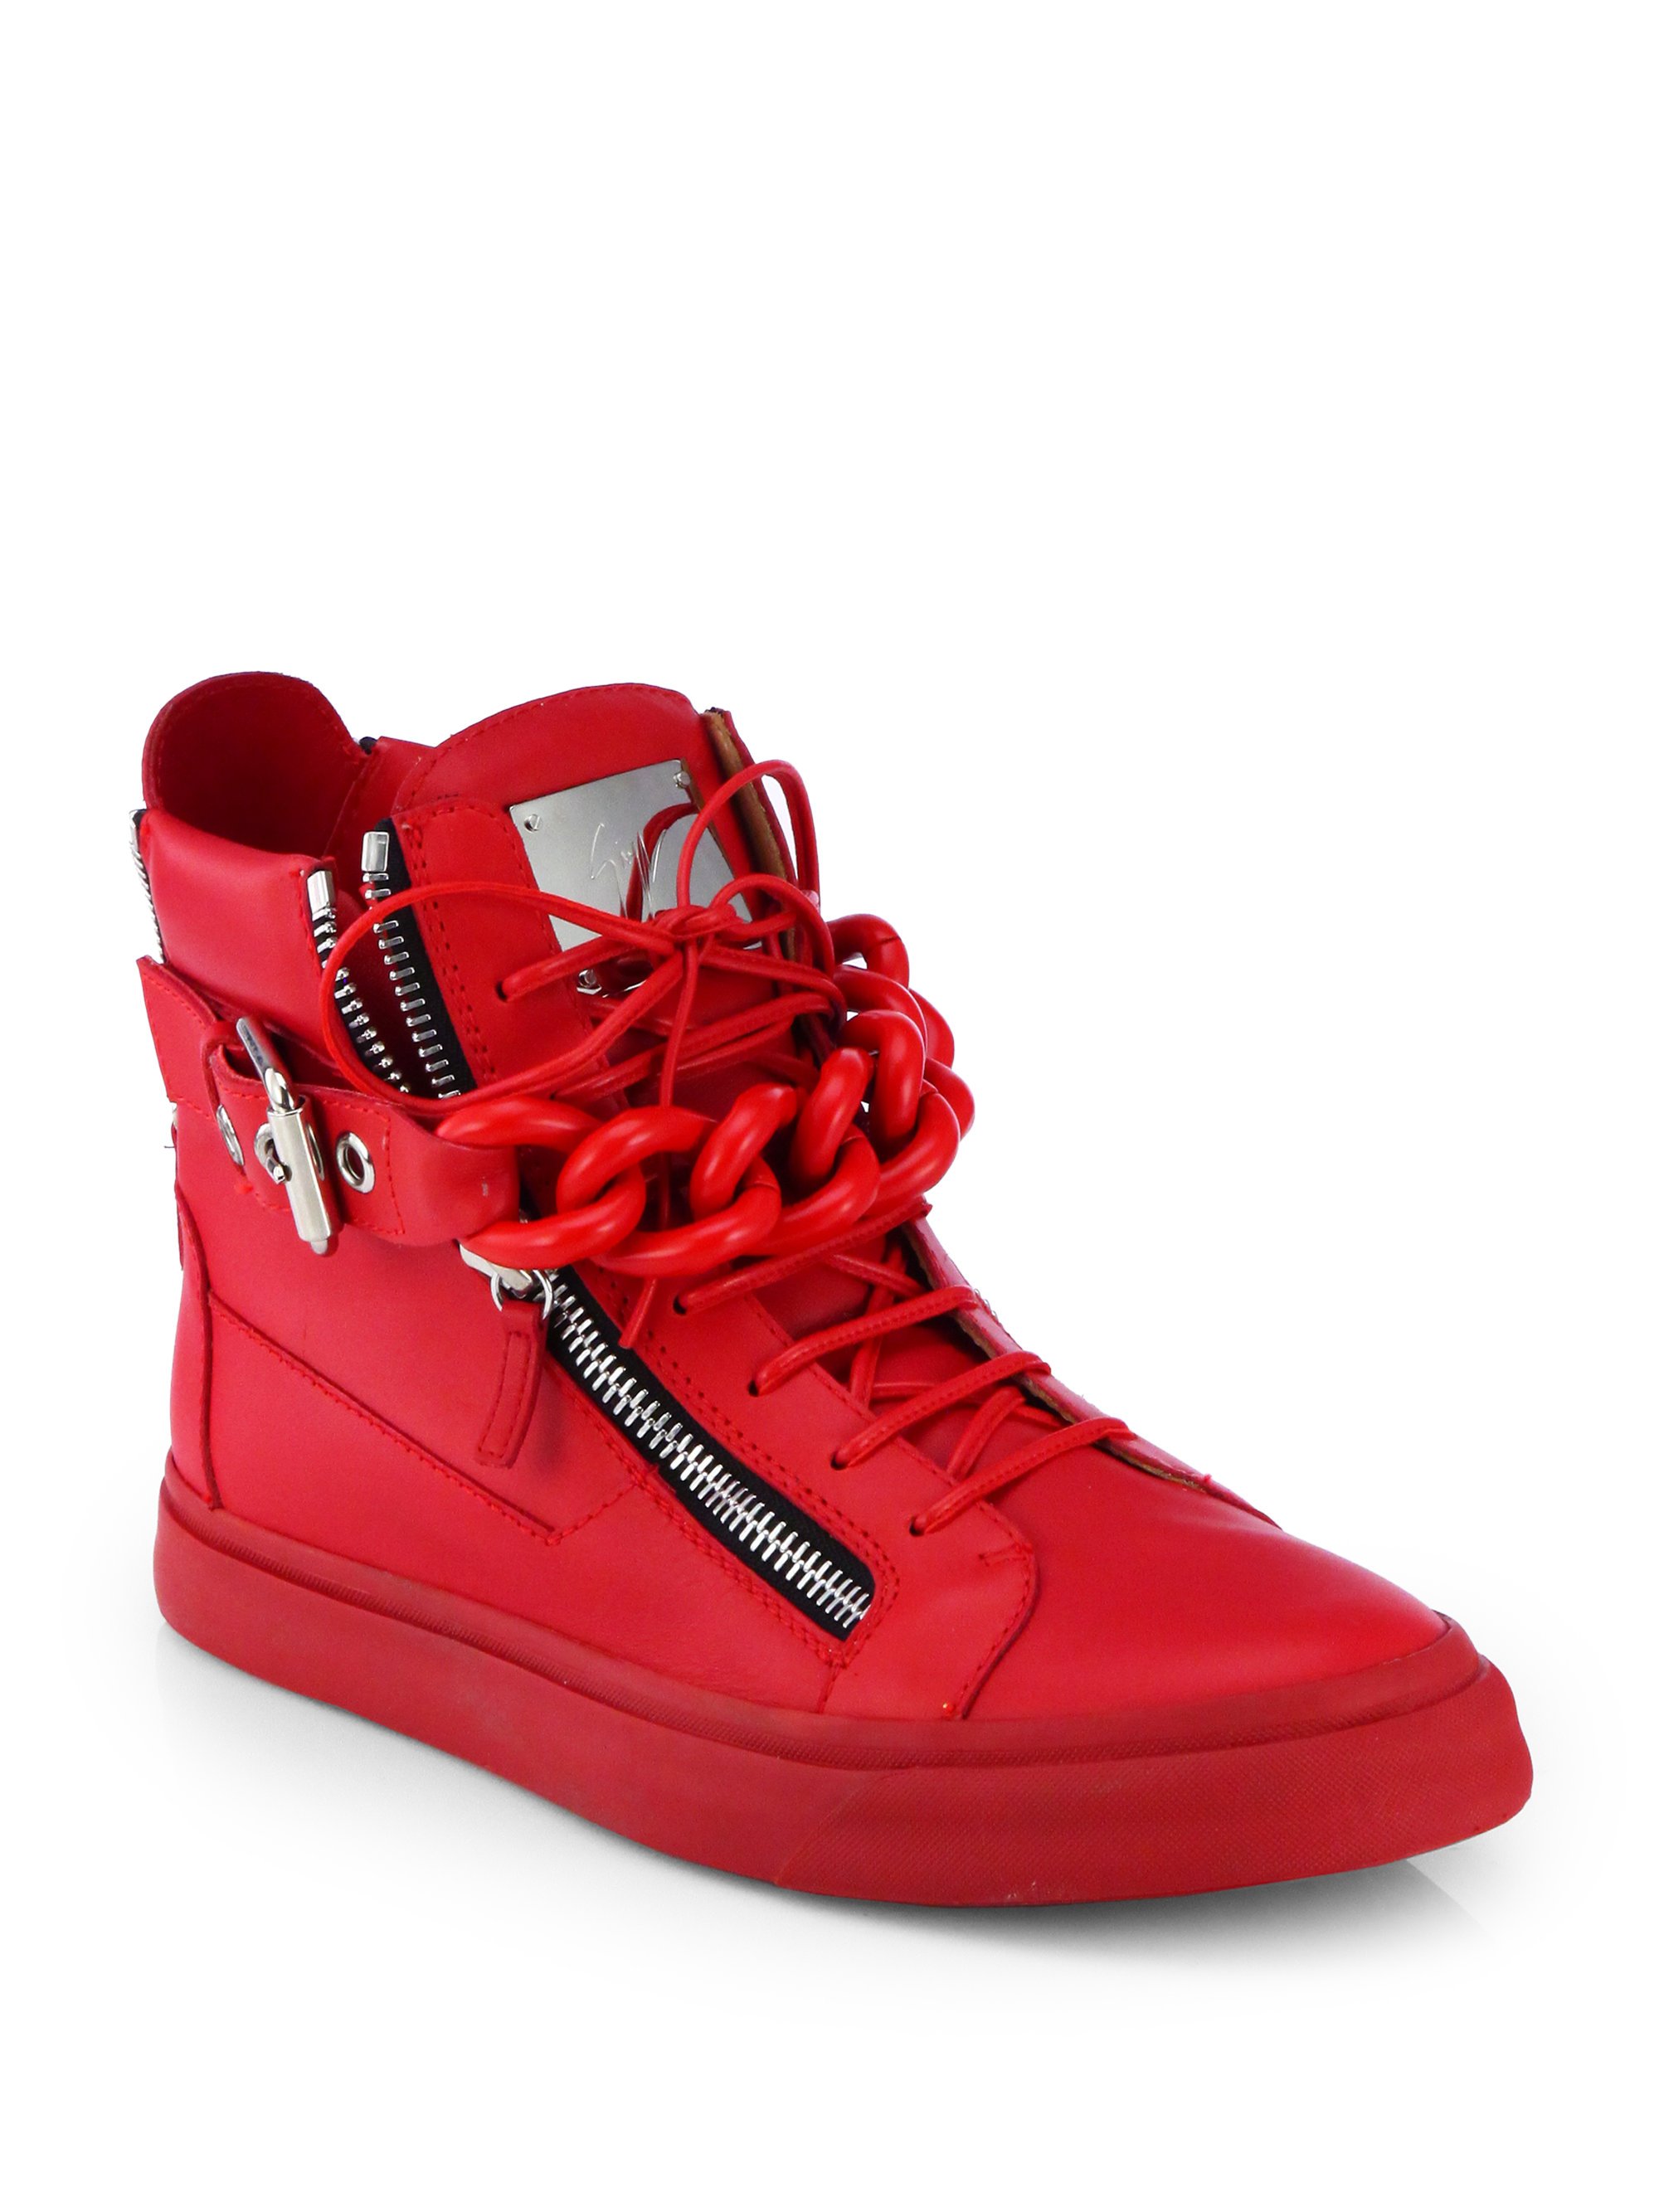 Giuseppe Zanotti Tonal Chain Sneakers in Red for Men - Lyst